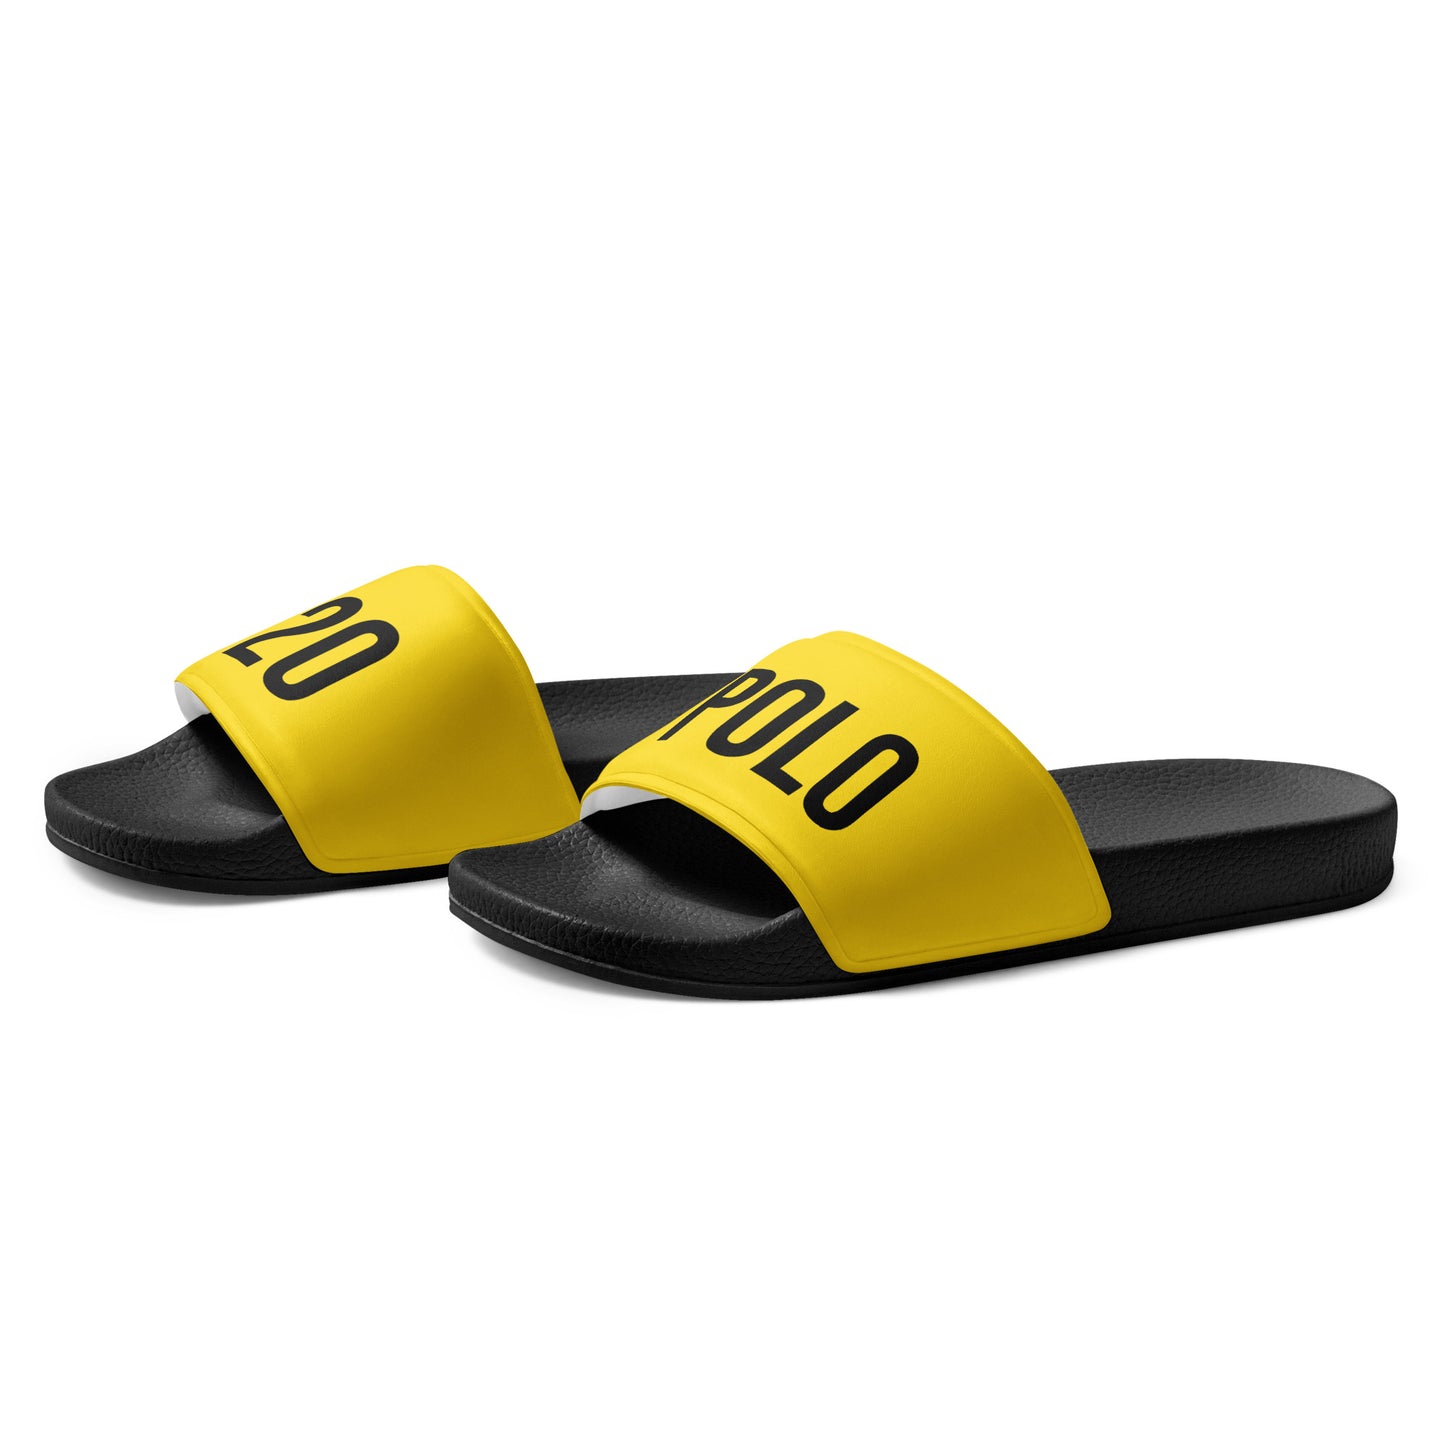 Black / Yellow Men's Water Polo Flip Flops